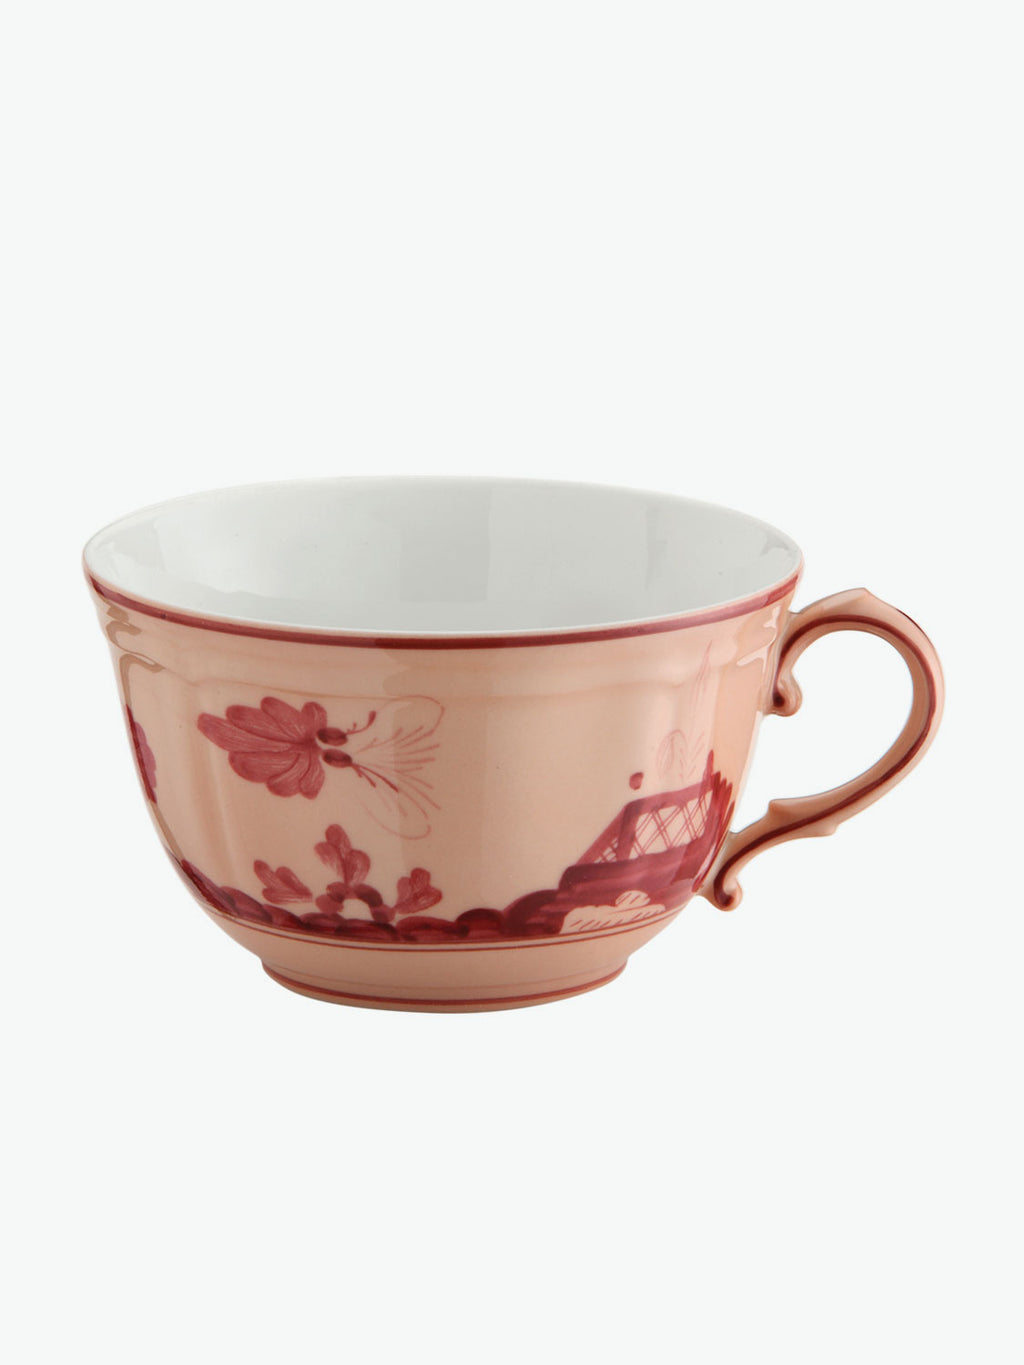 Ginori 1735 Tea Cups And Saucers Oriente Italiano